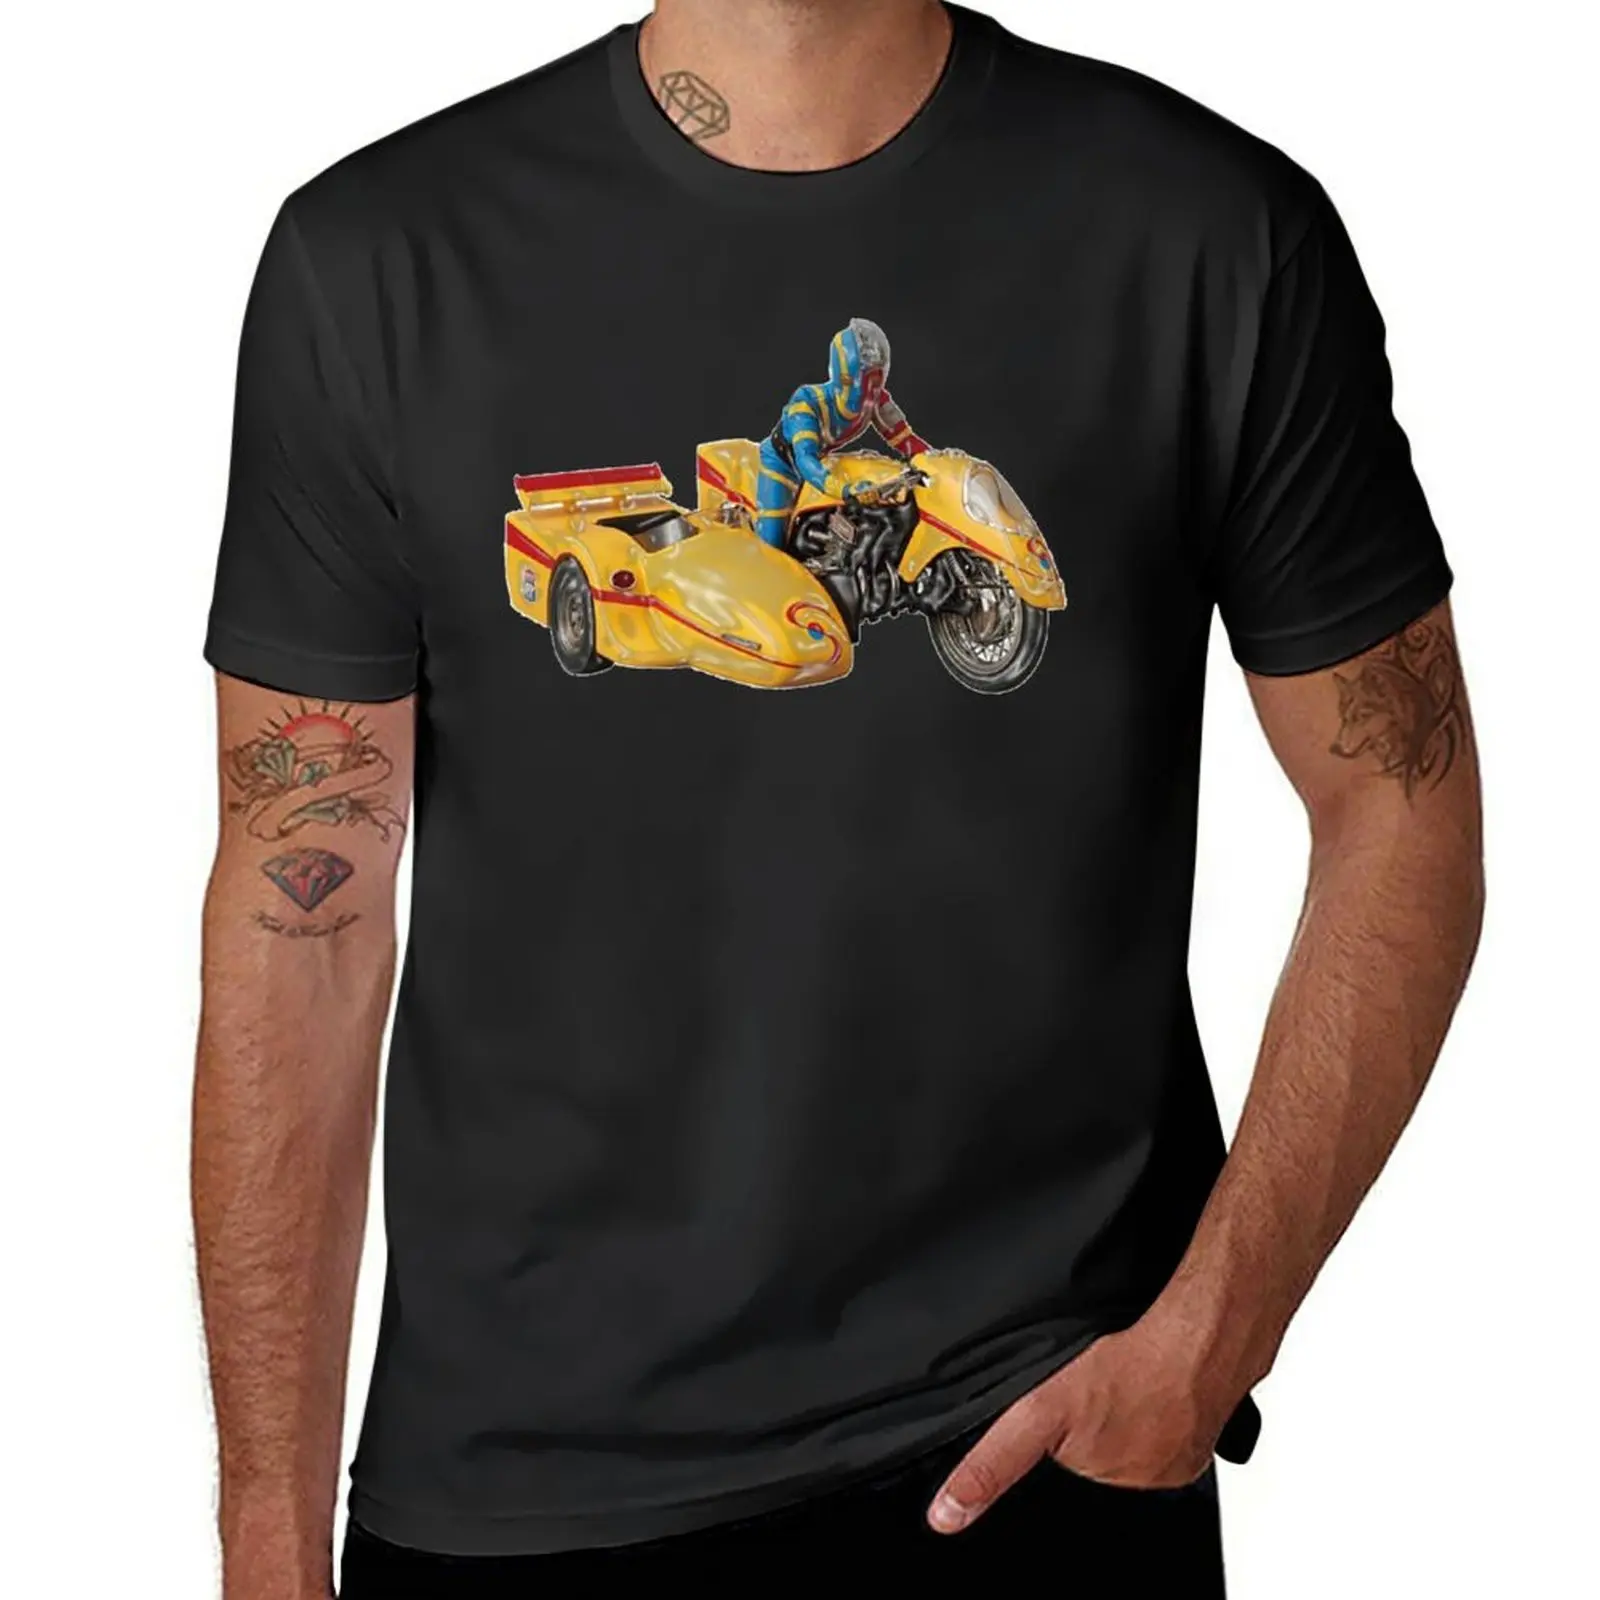 Kikaida moto t-shirt hippie vestiti pesanti ragazzi animal print tees camicia da allenamento da uomo